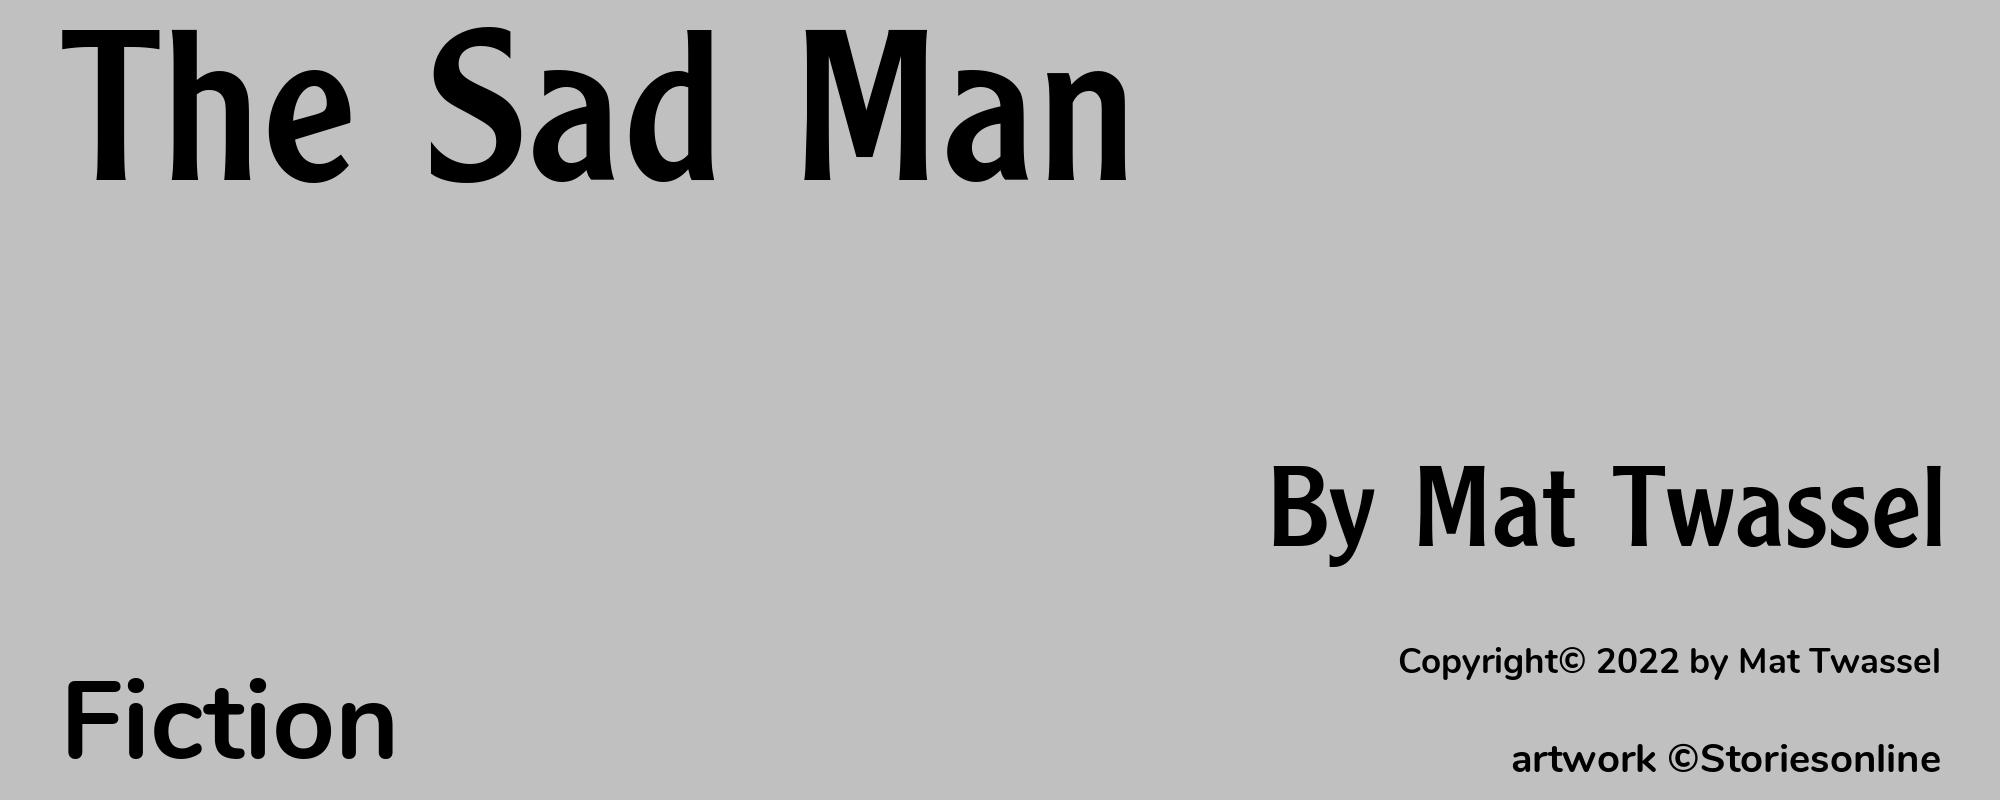 The Sad Man - Cover